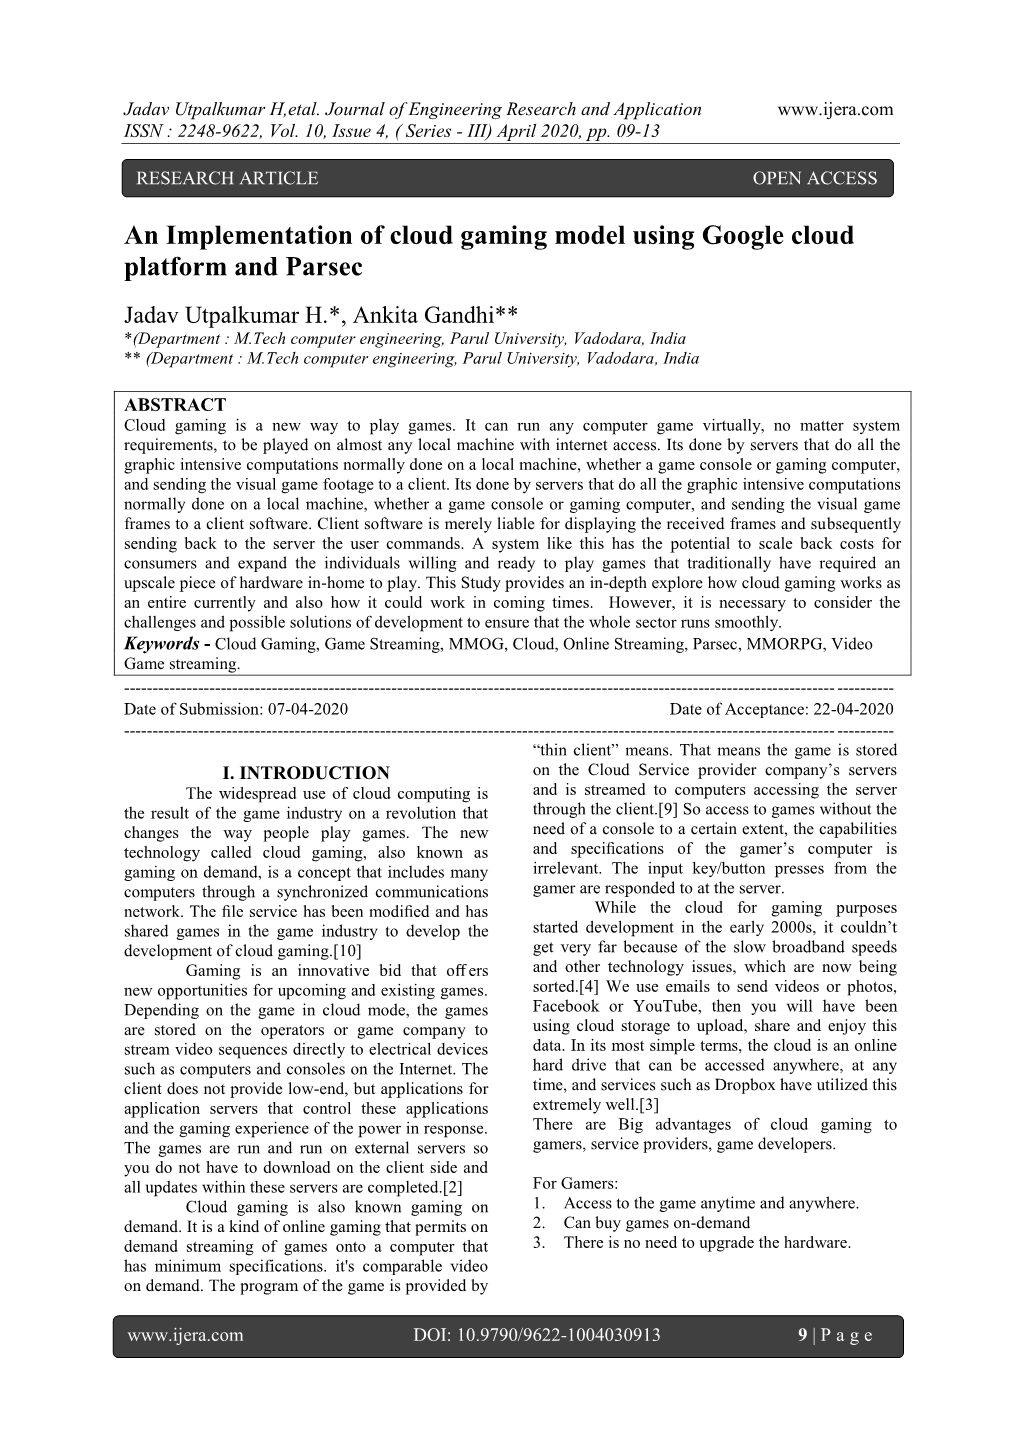 An Implementation of Cloud Gaming Model Using Google Cloud Platform and Parsec